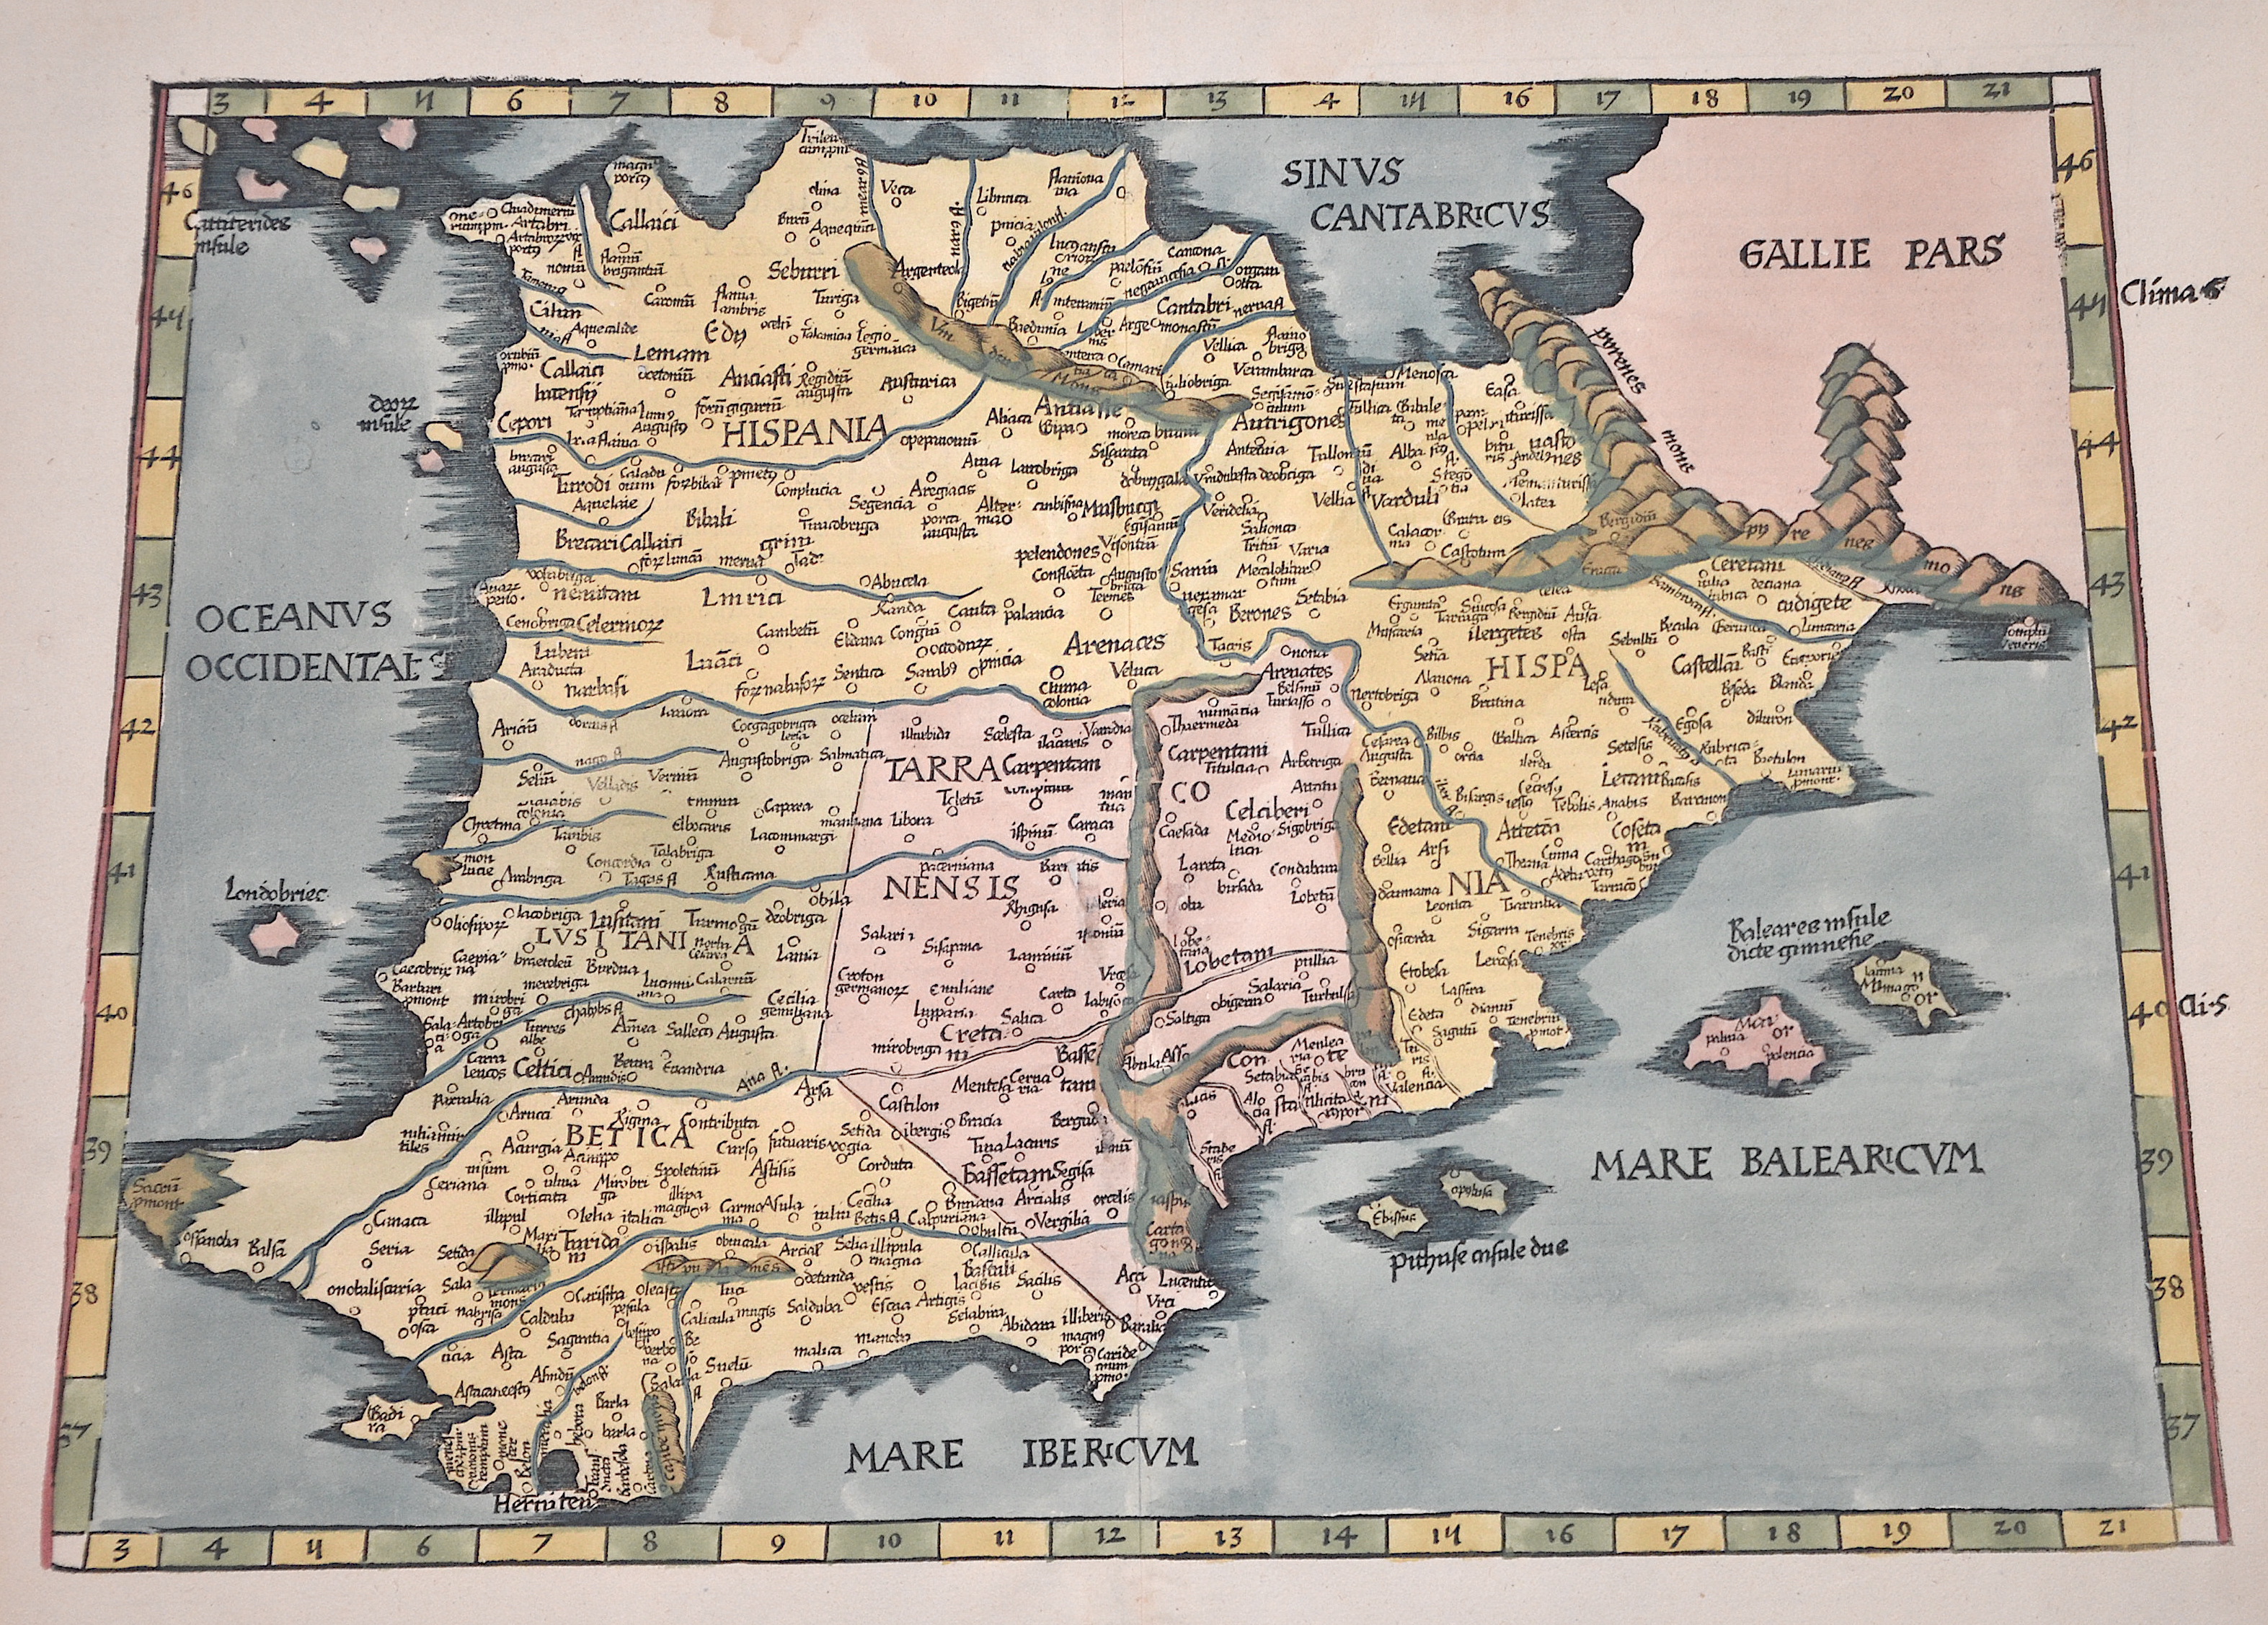 Ptolemy/Waldseemüller- Johann Schott Claudius Europae tabula secunda continet Hispaniam…